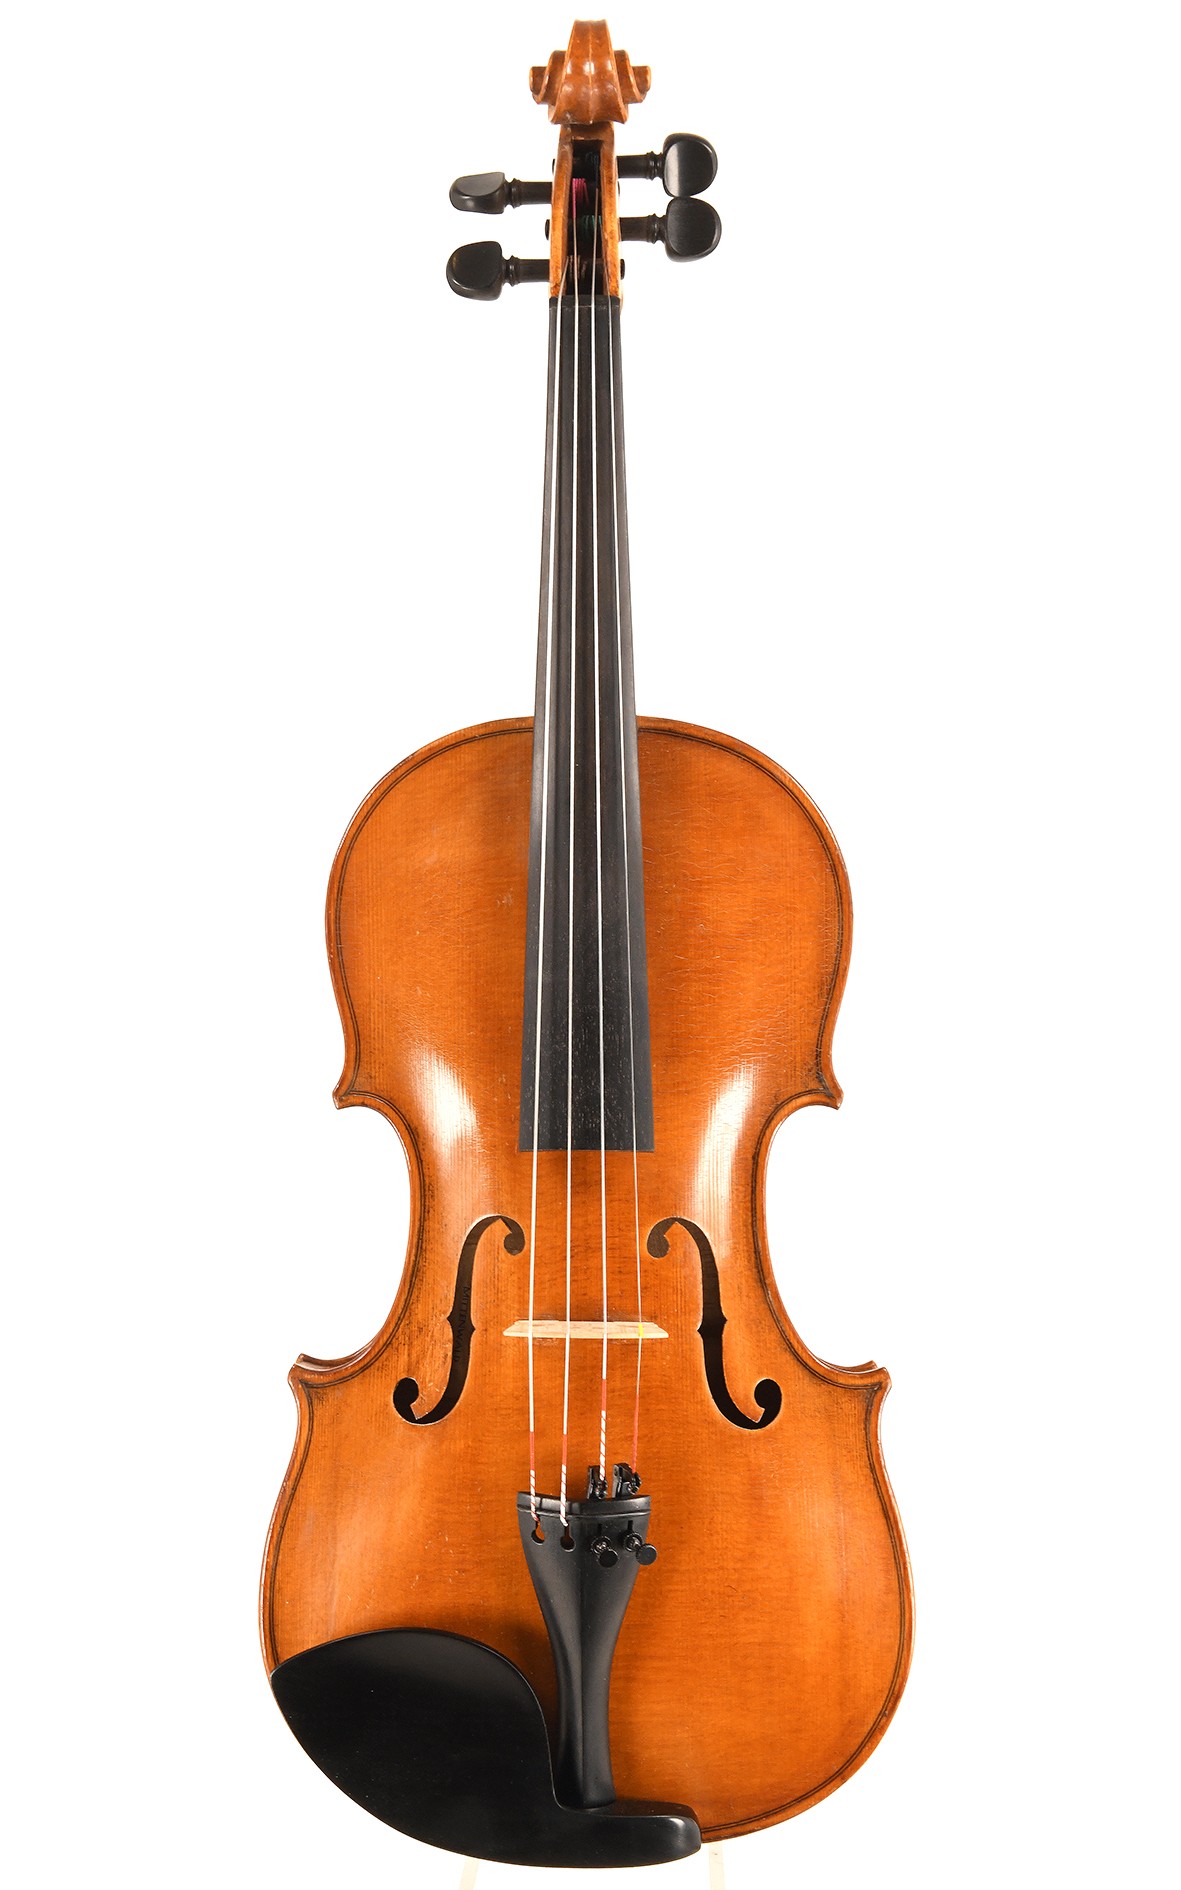 Violin from Mittenwald by Edi Sandner